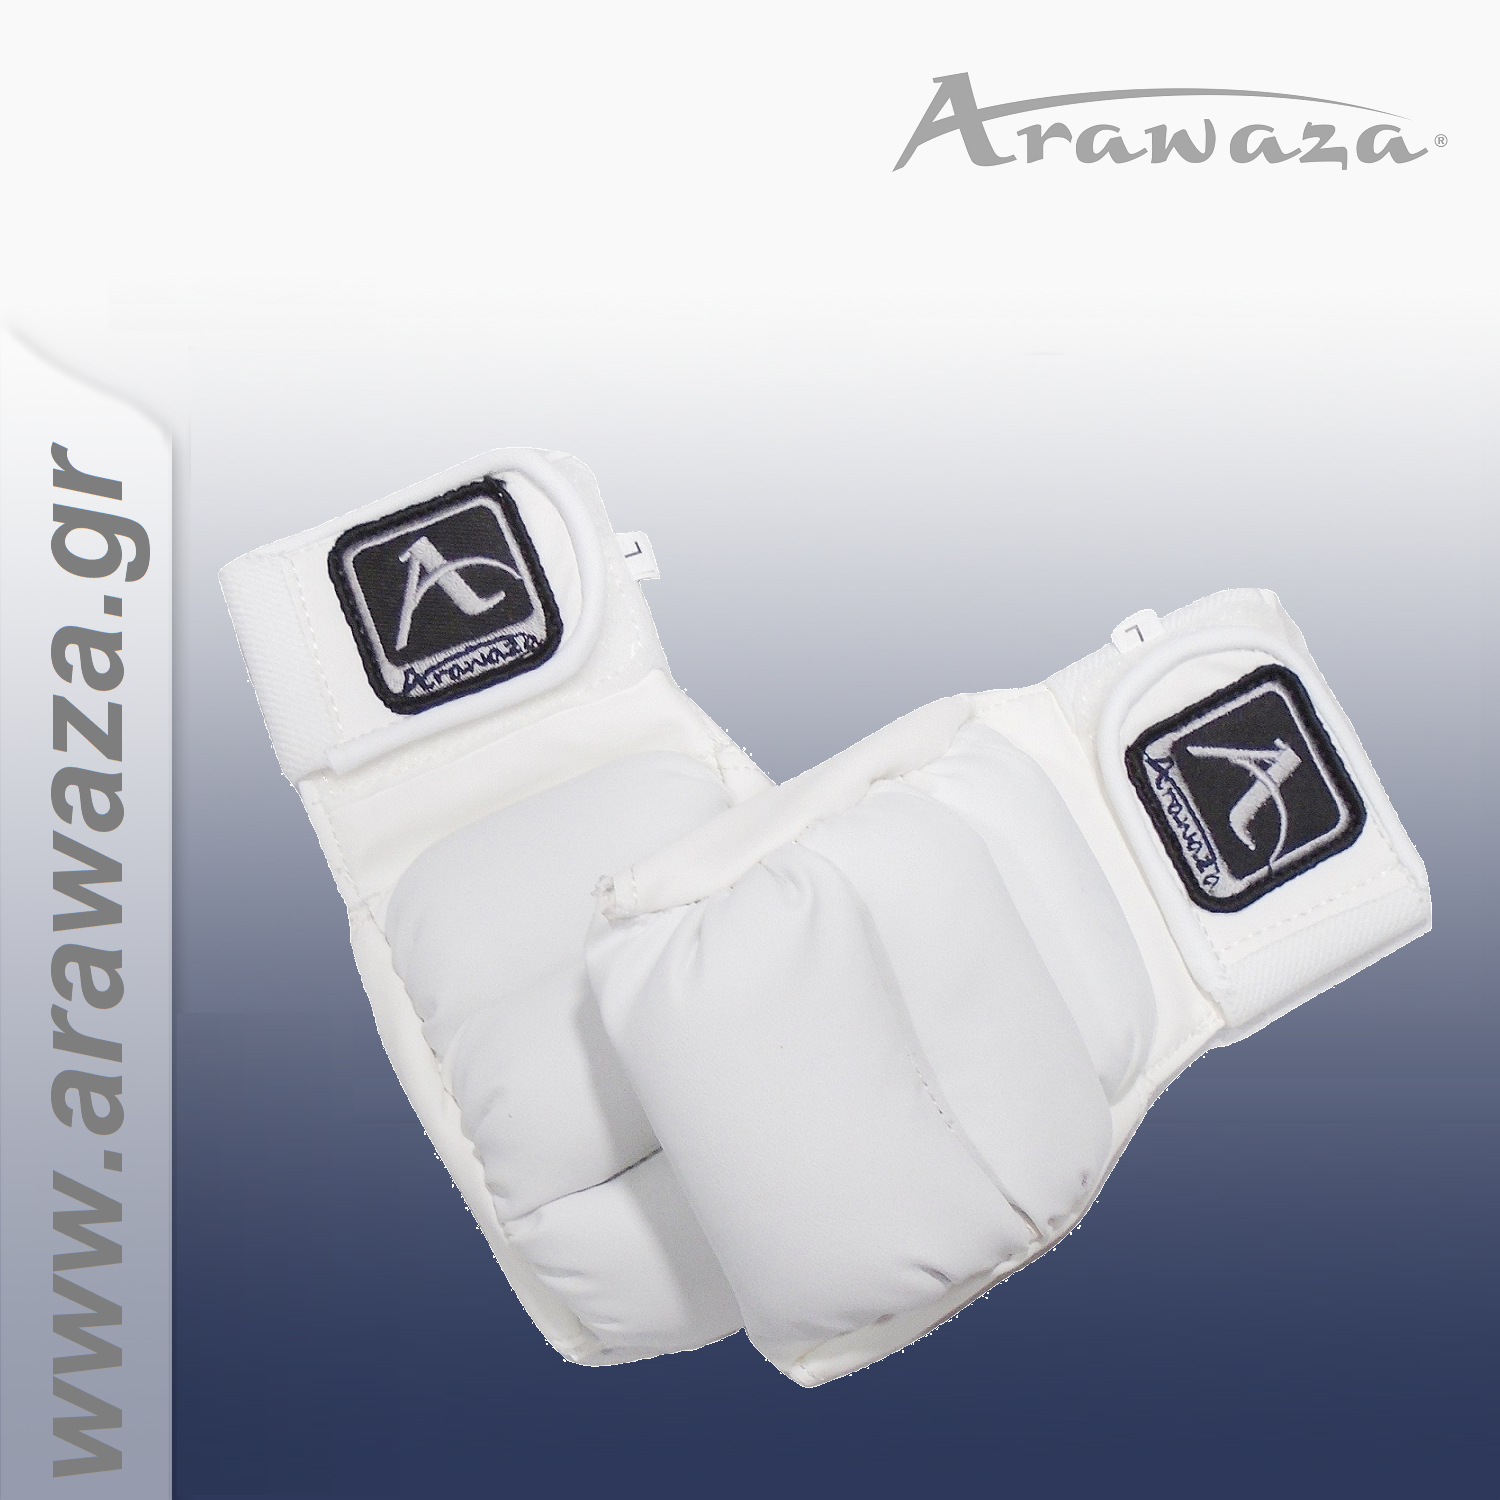 Arawaza Fist Gear Leather